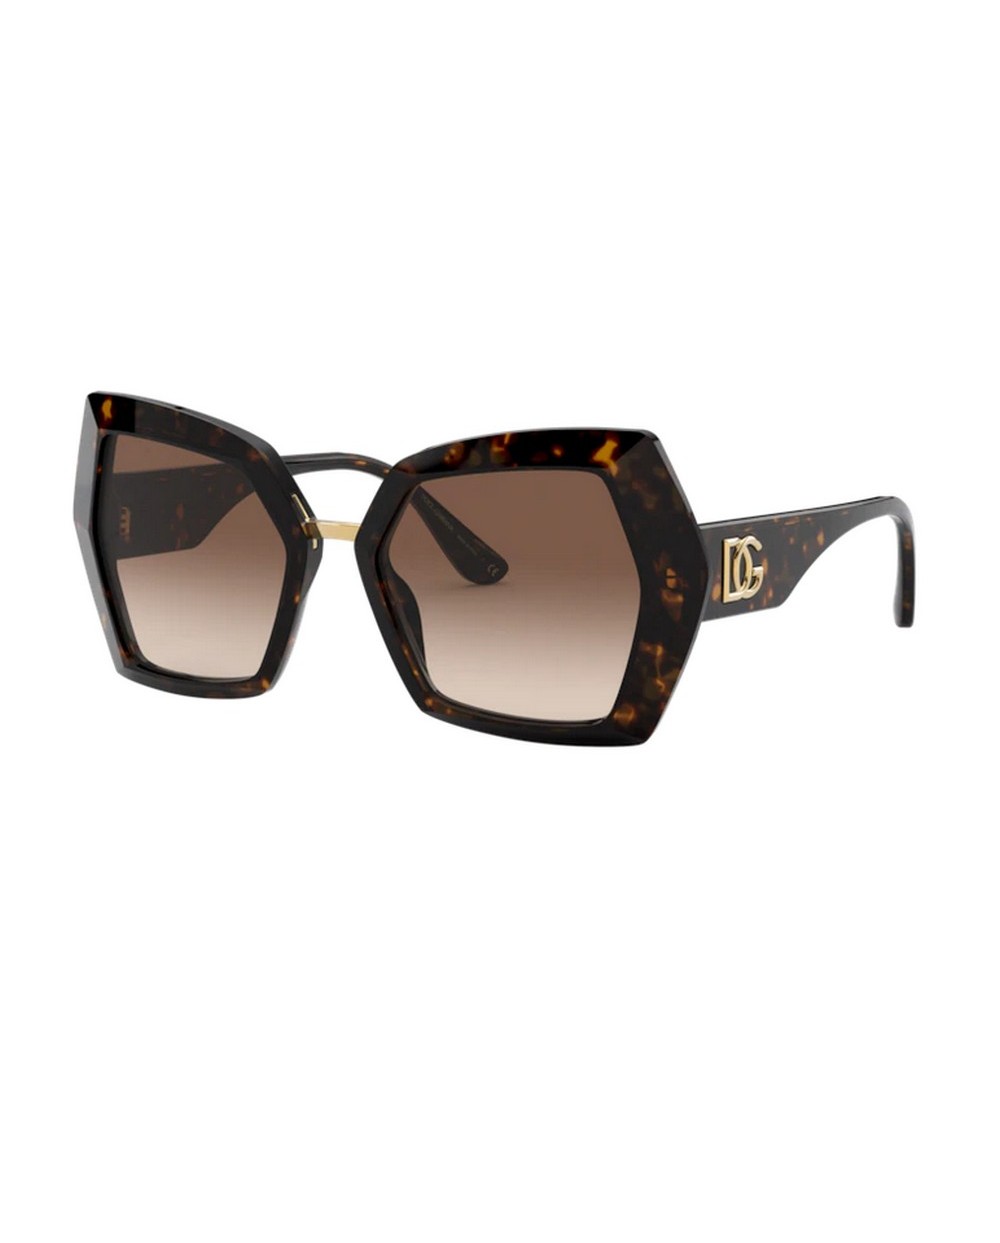 Dolce&gabbana sunglasses DG 4377 original Italian warranty